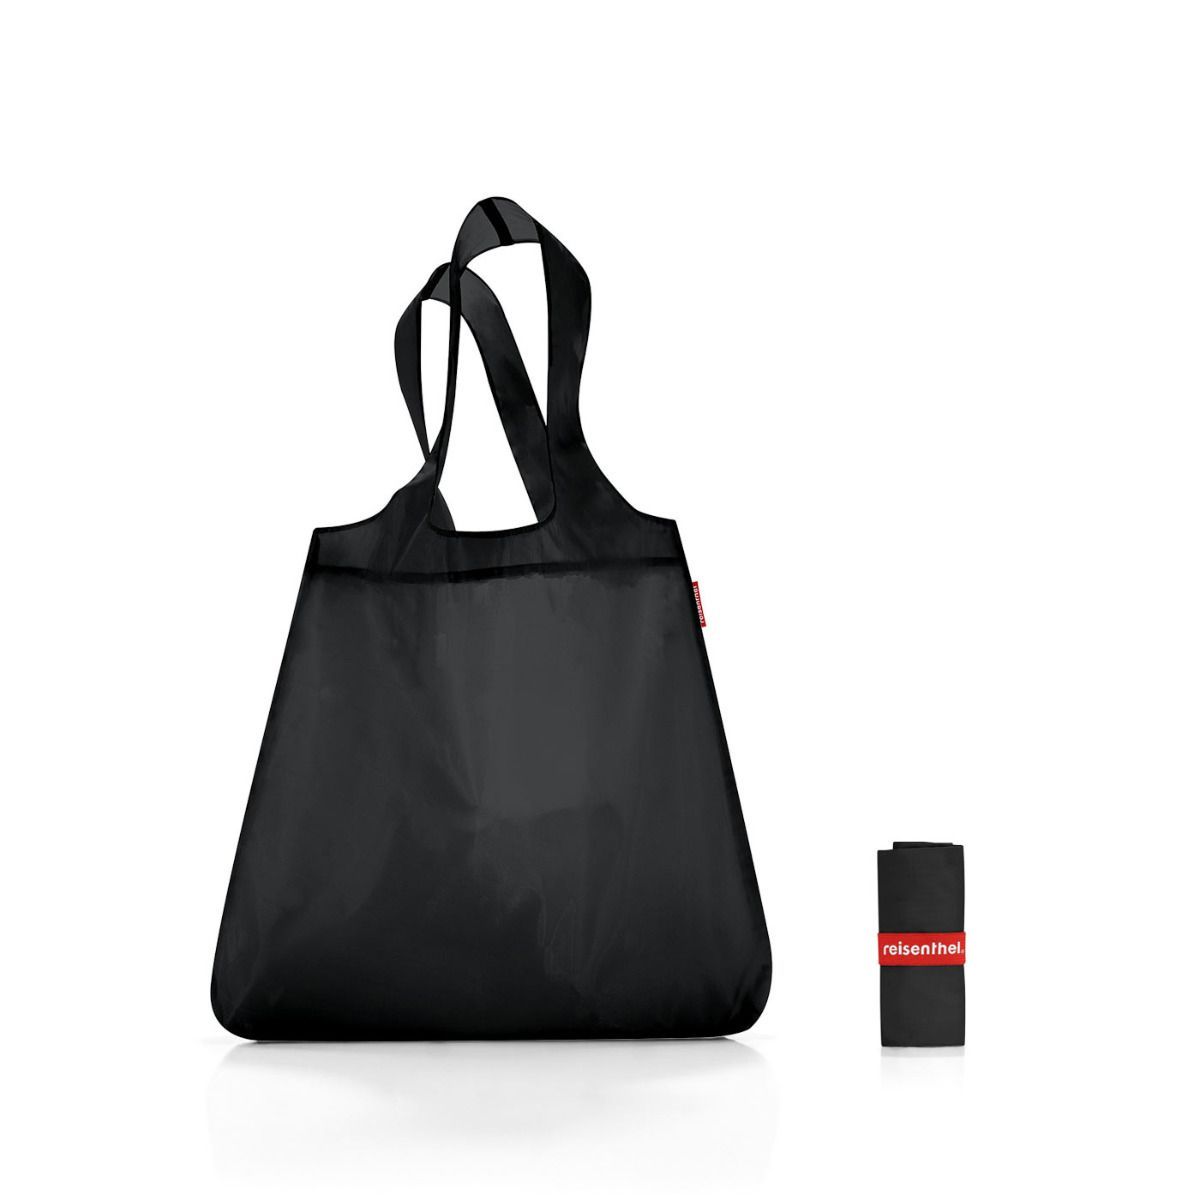 REISENTHEL easyshoppingbag (Einkaufswagentasche), glencheck red